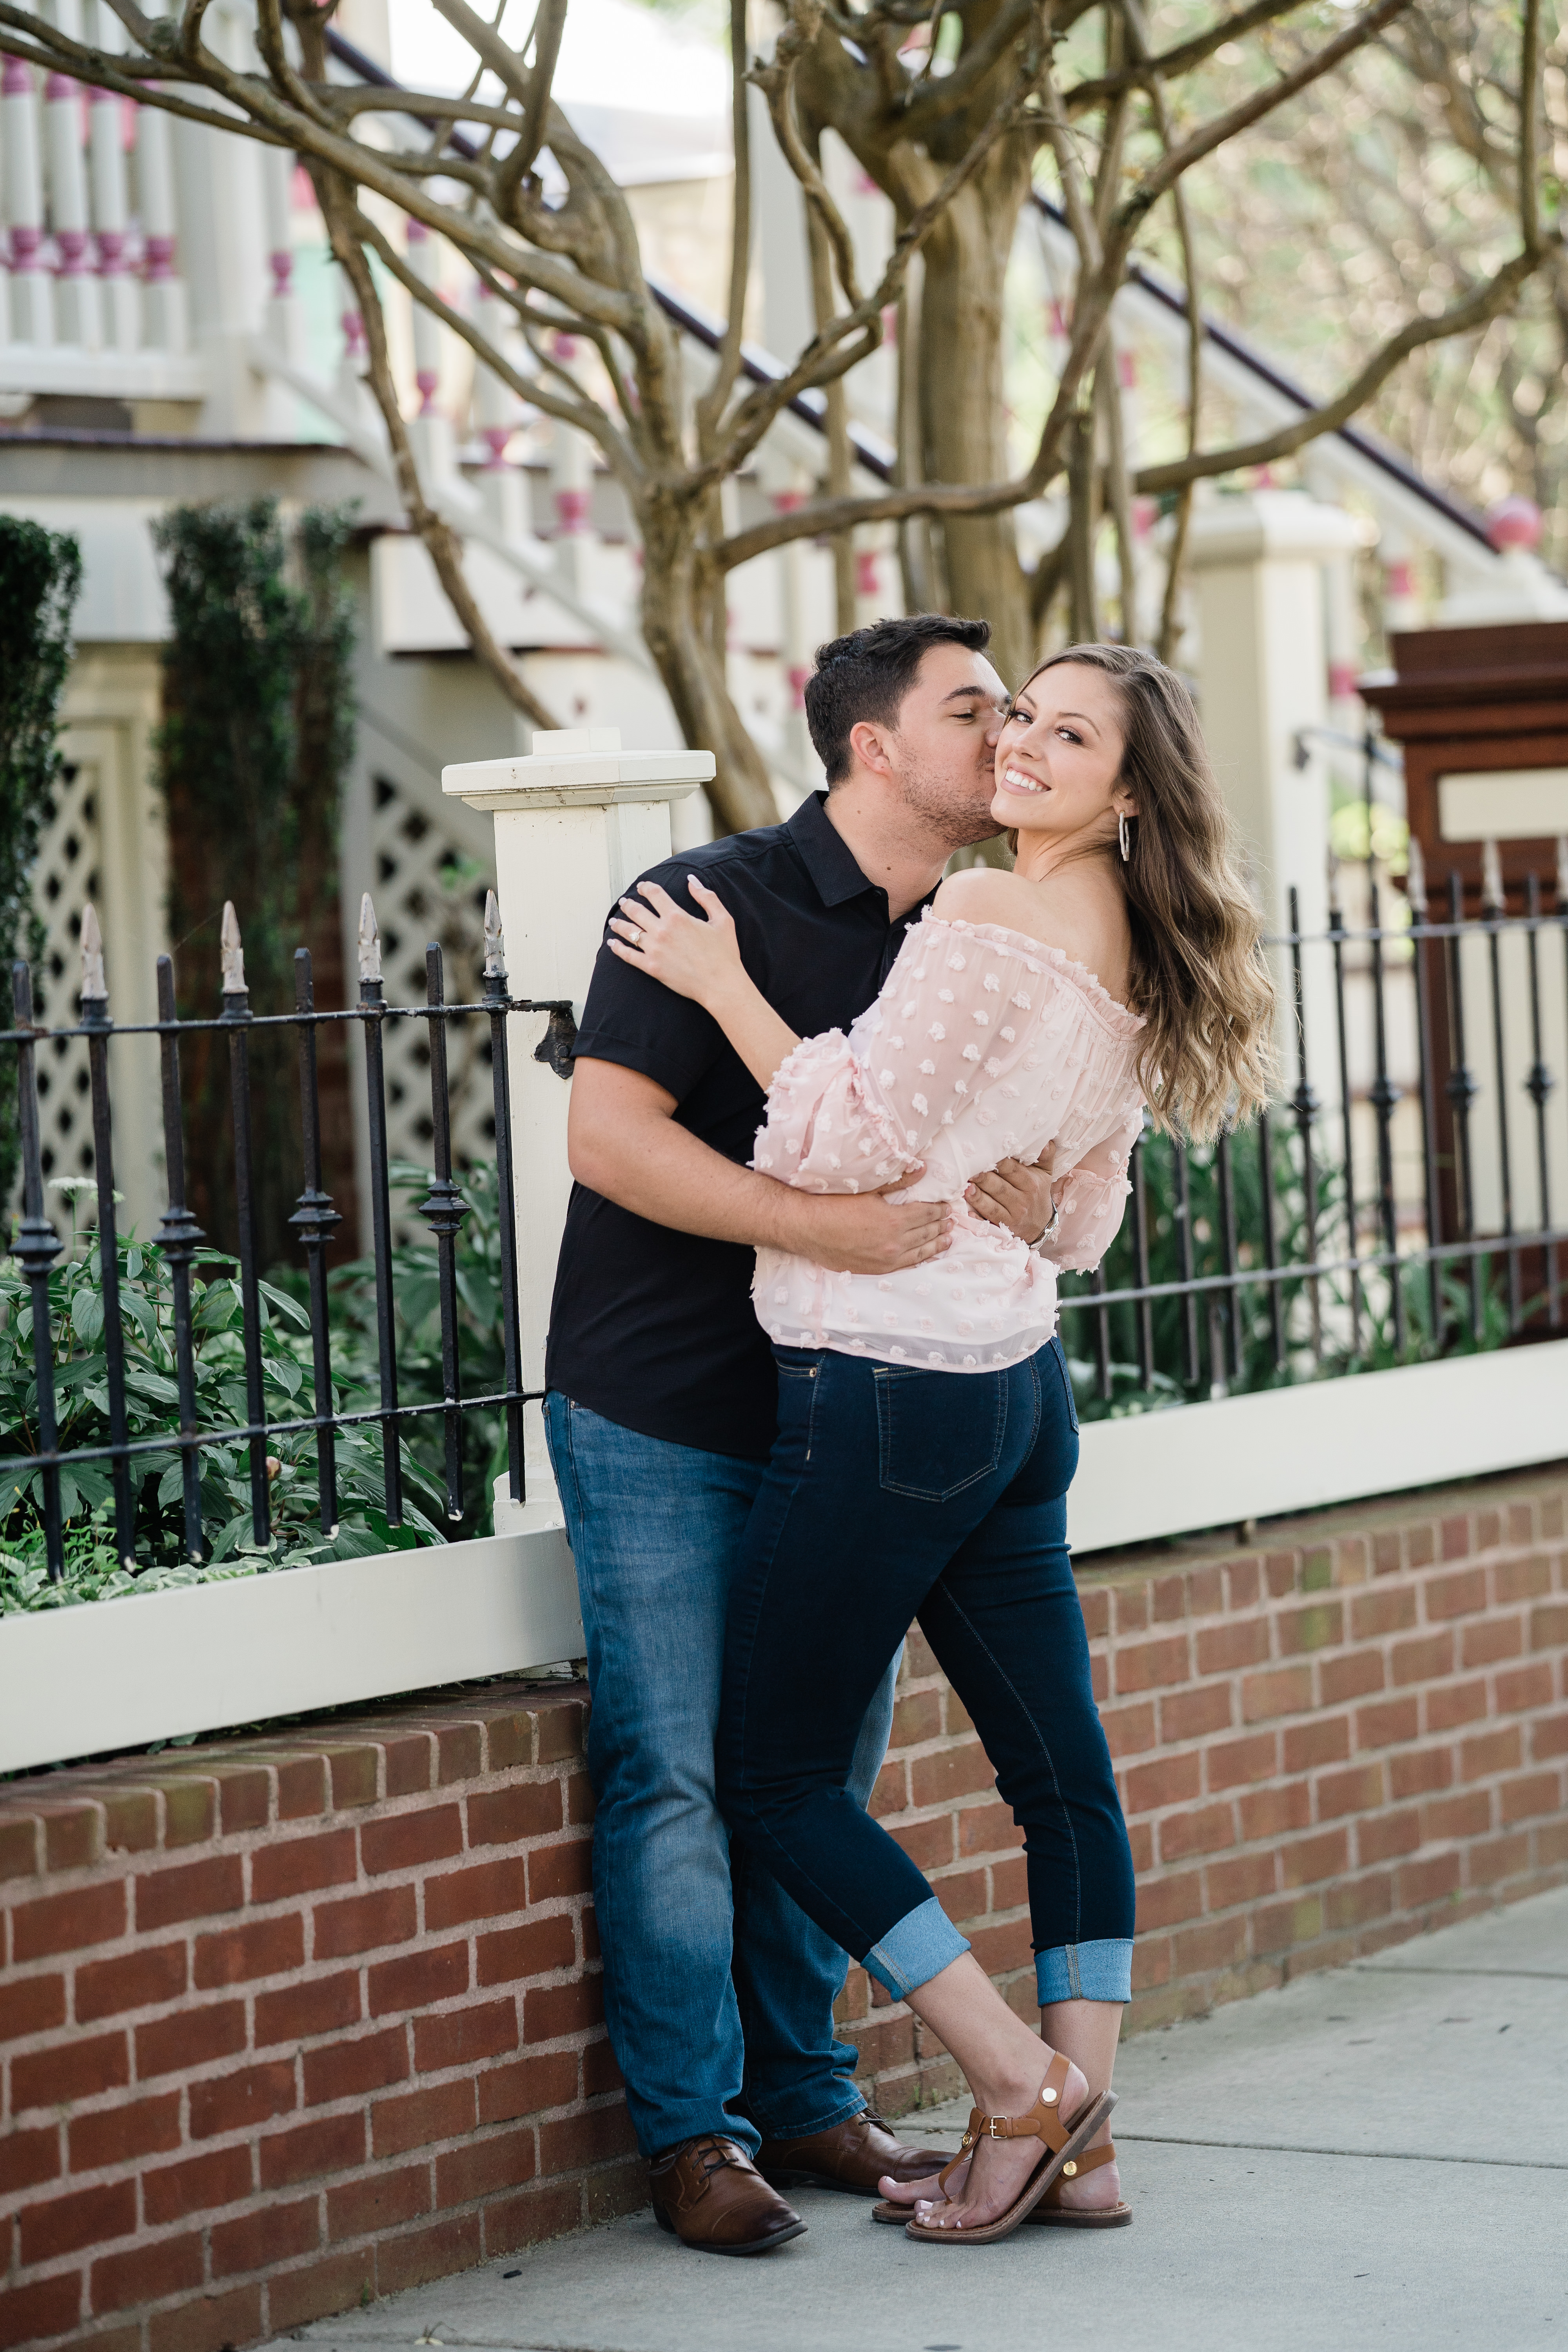 Fort Wayne wedding photographer captures man kissing woman's cheek during engagements after surprise proposal